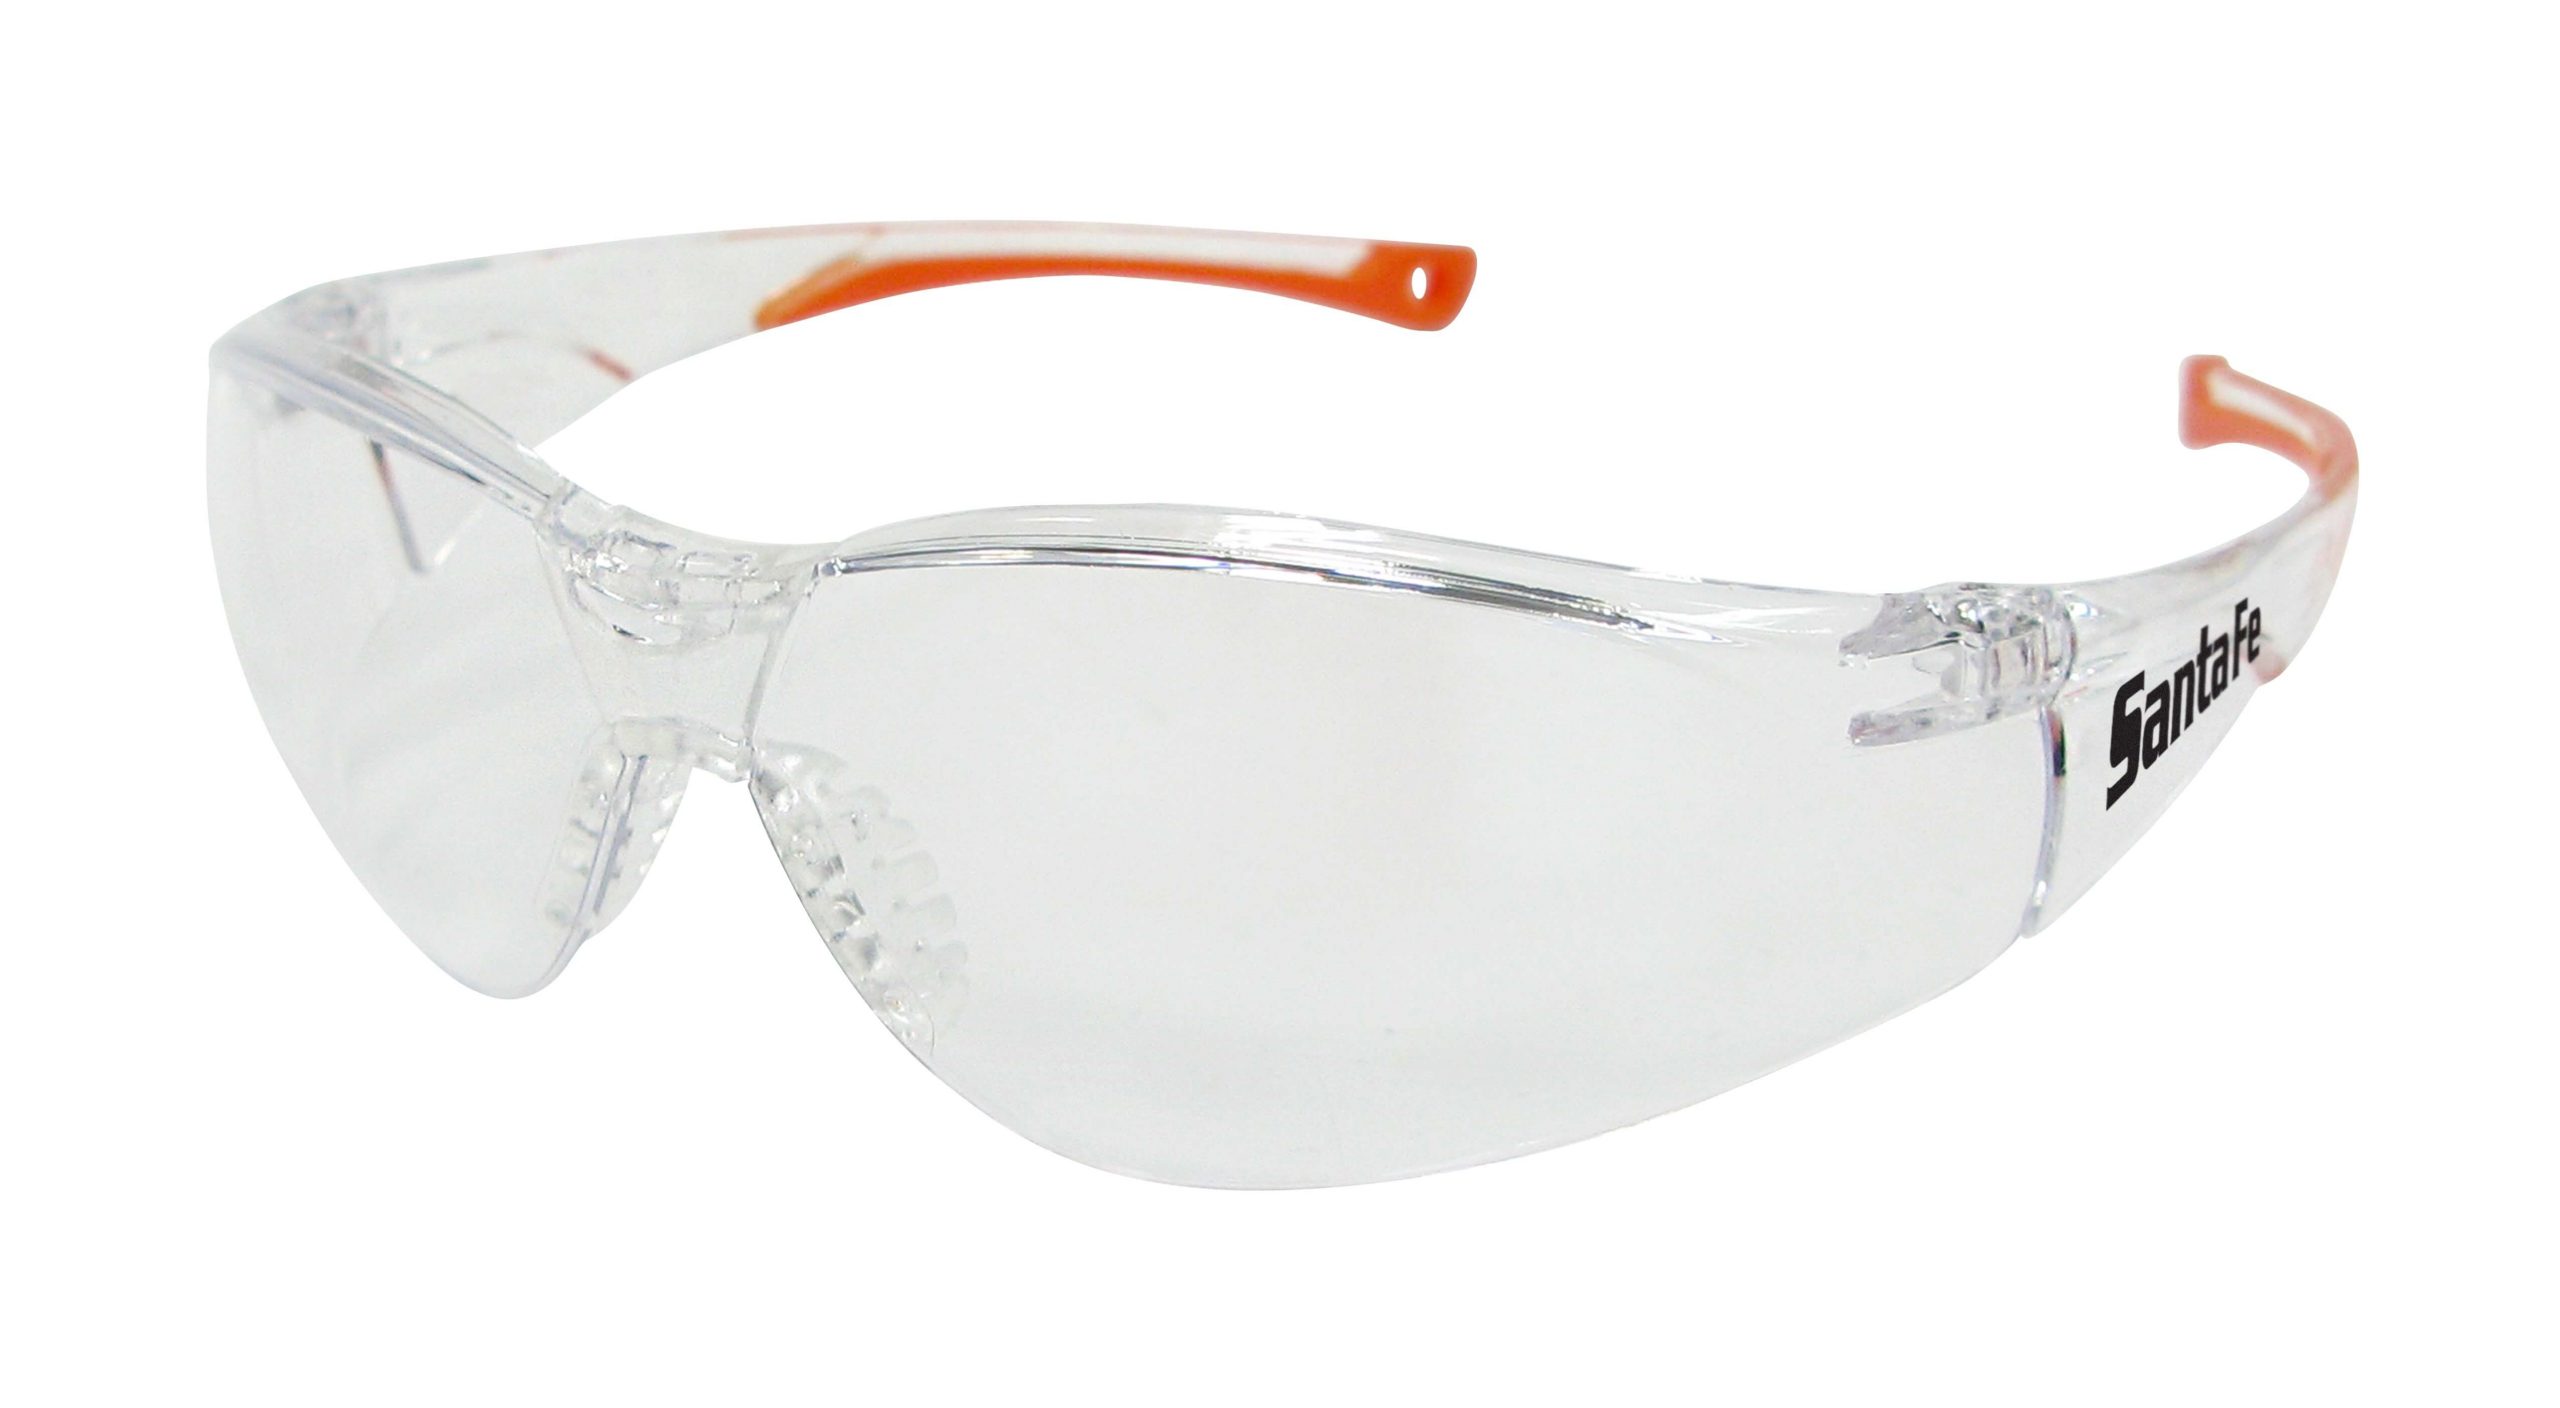 EBR335 Santa Fe Safety Glasses Clear